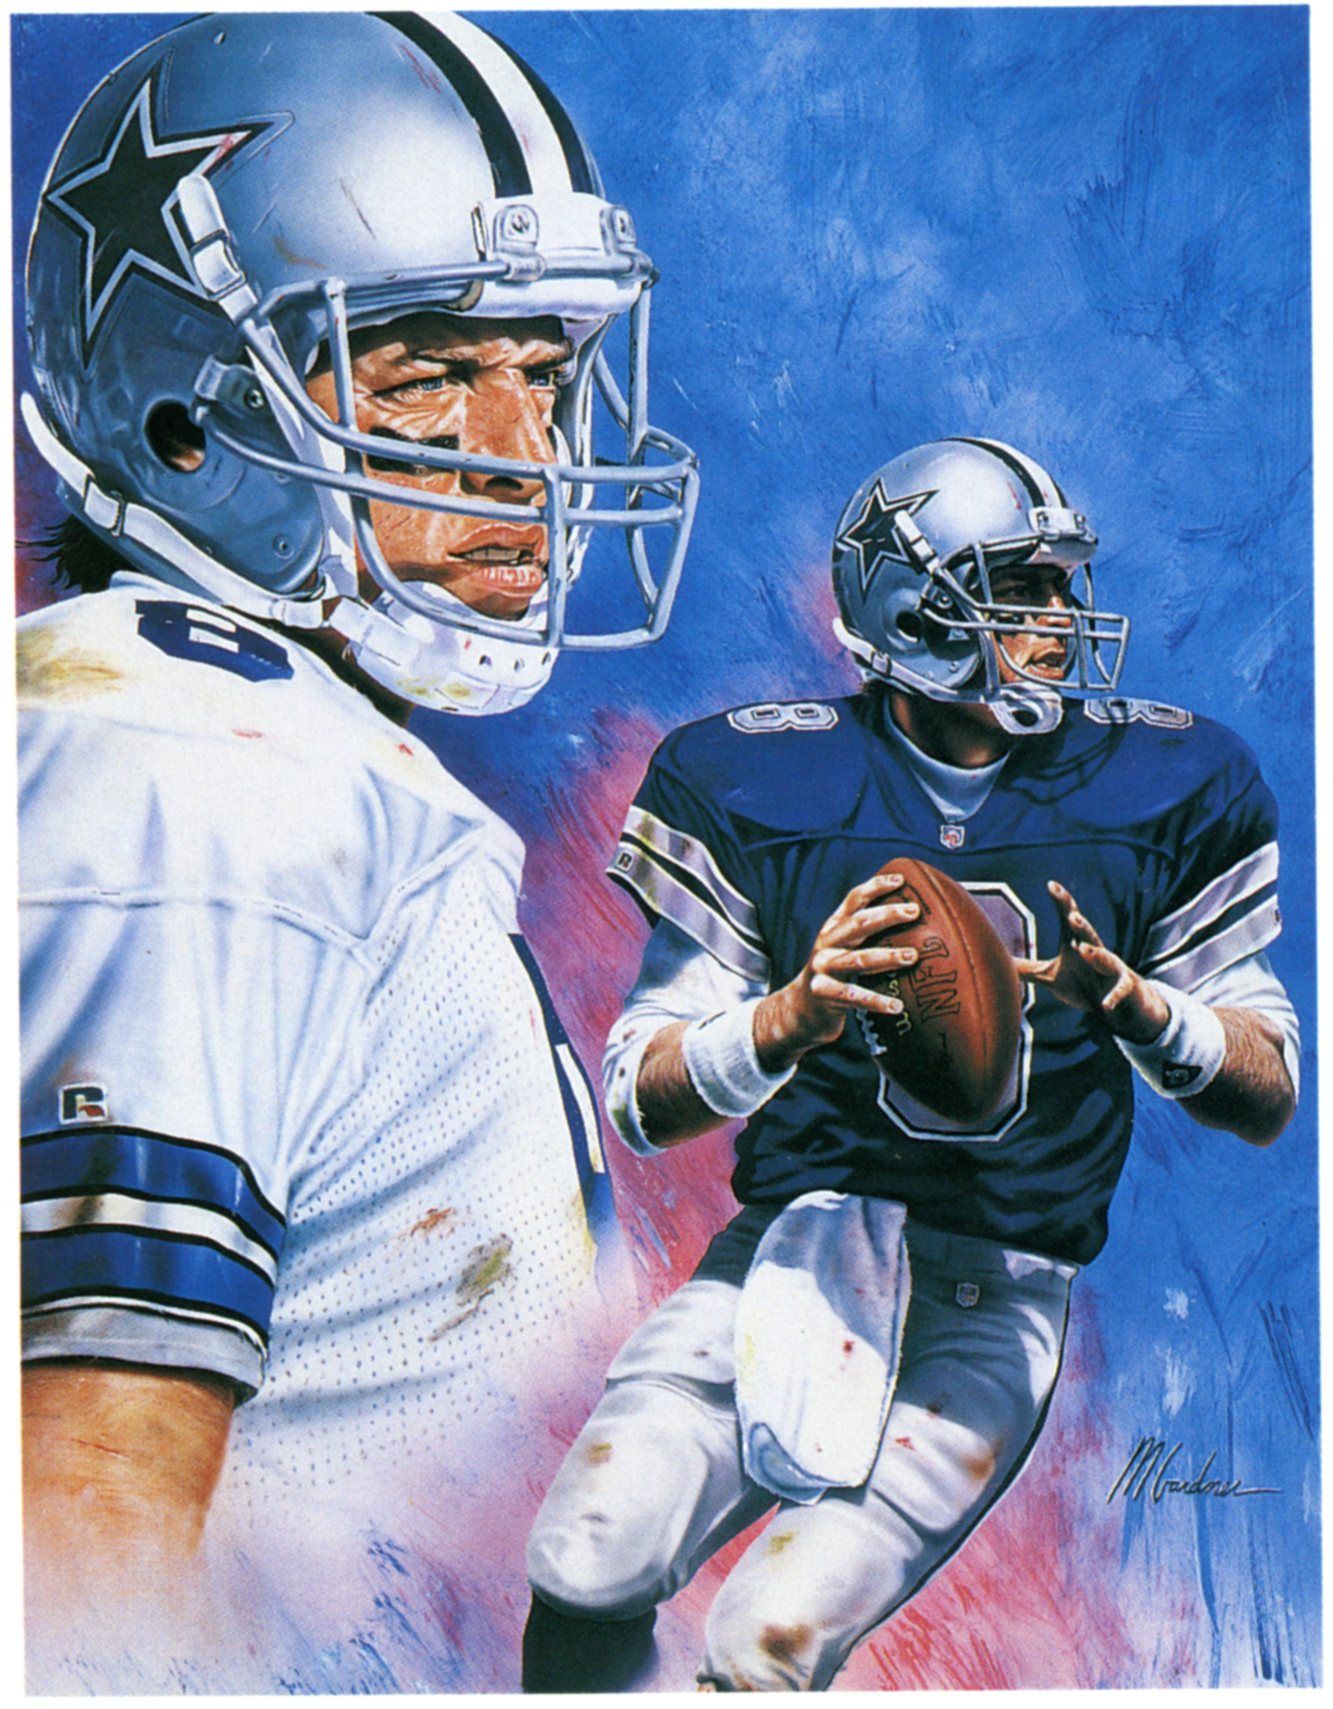 Dallas Cowboys QB Troy Aikman by by Mike Gardner. Dallas cowboys, Cowboys, Dallas cowboys football